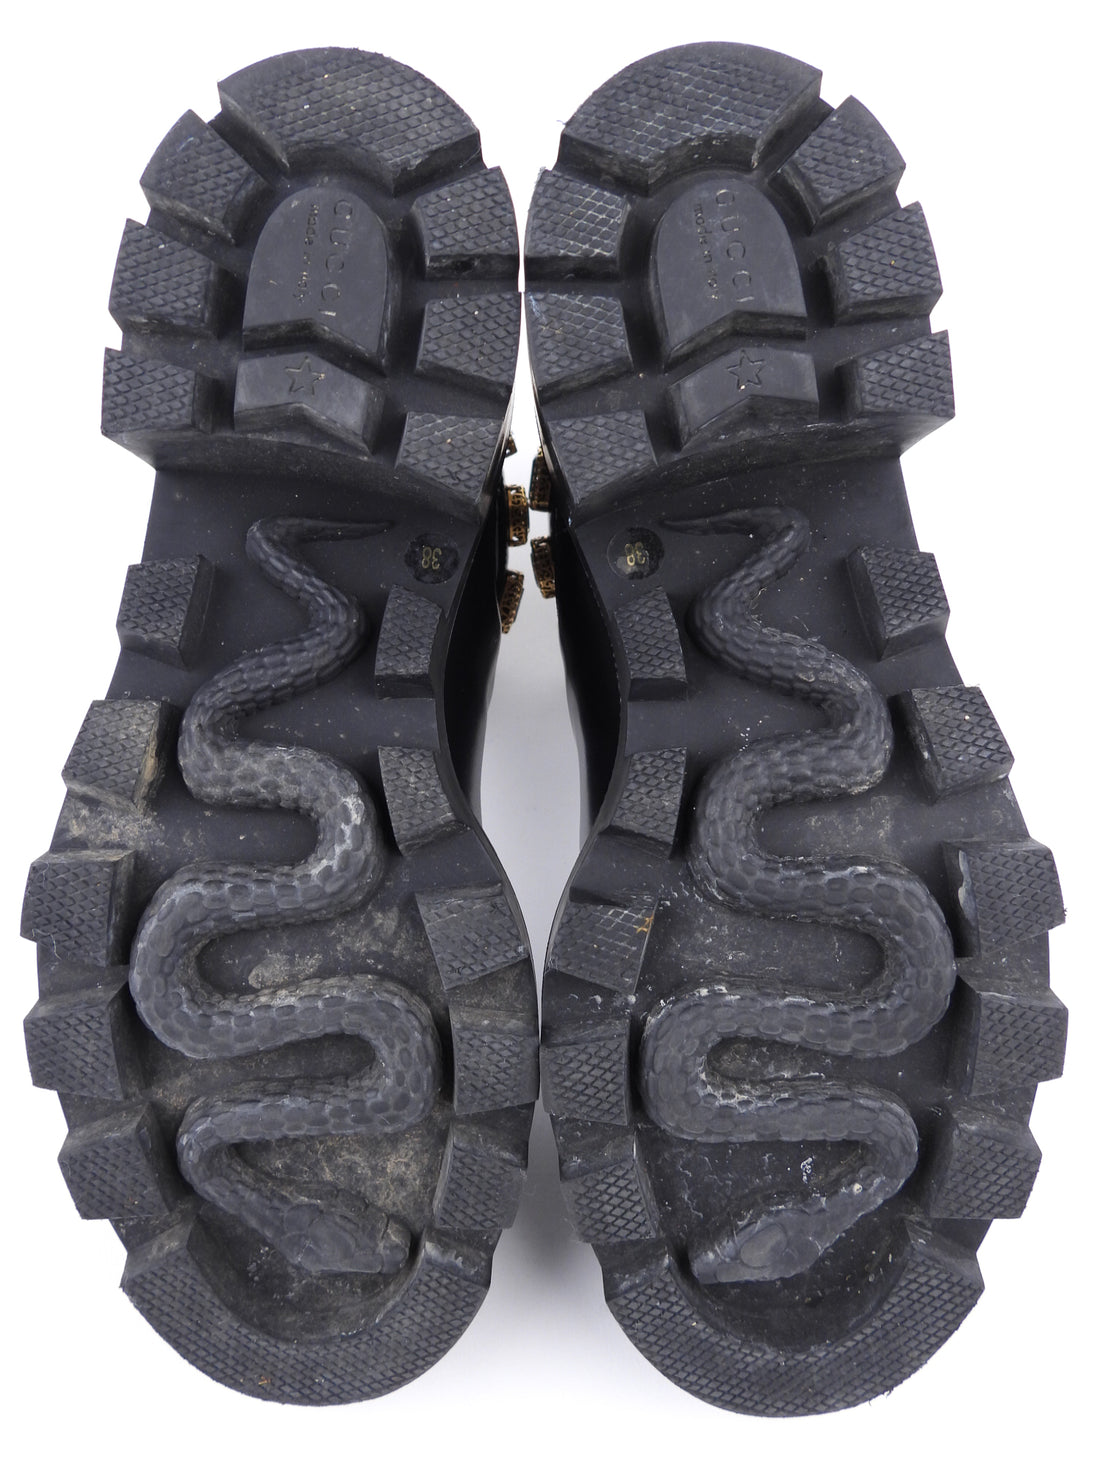 Gucci Black Leather Rhinestone Embellished Belt Chelsea Ankle Boot - 38